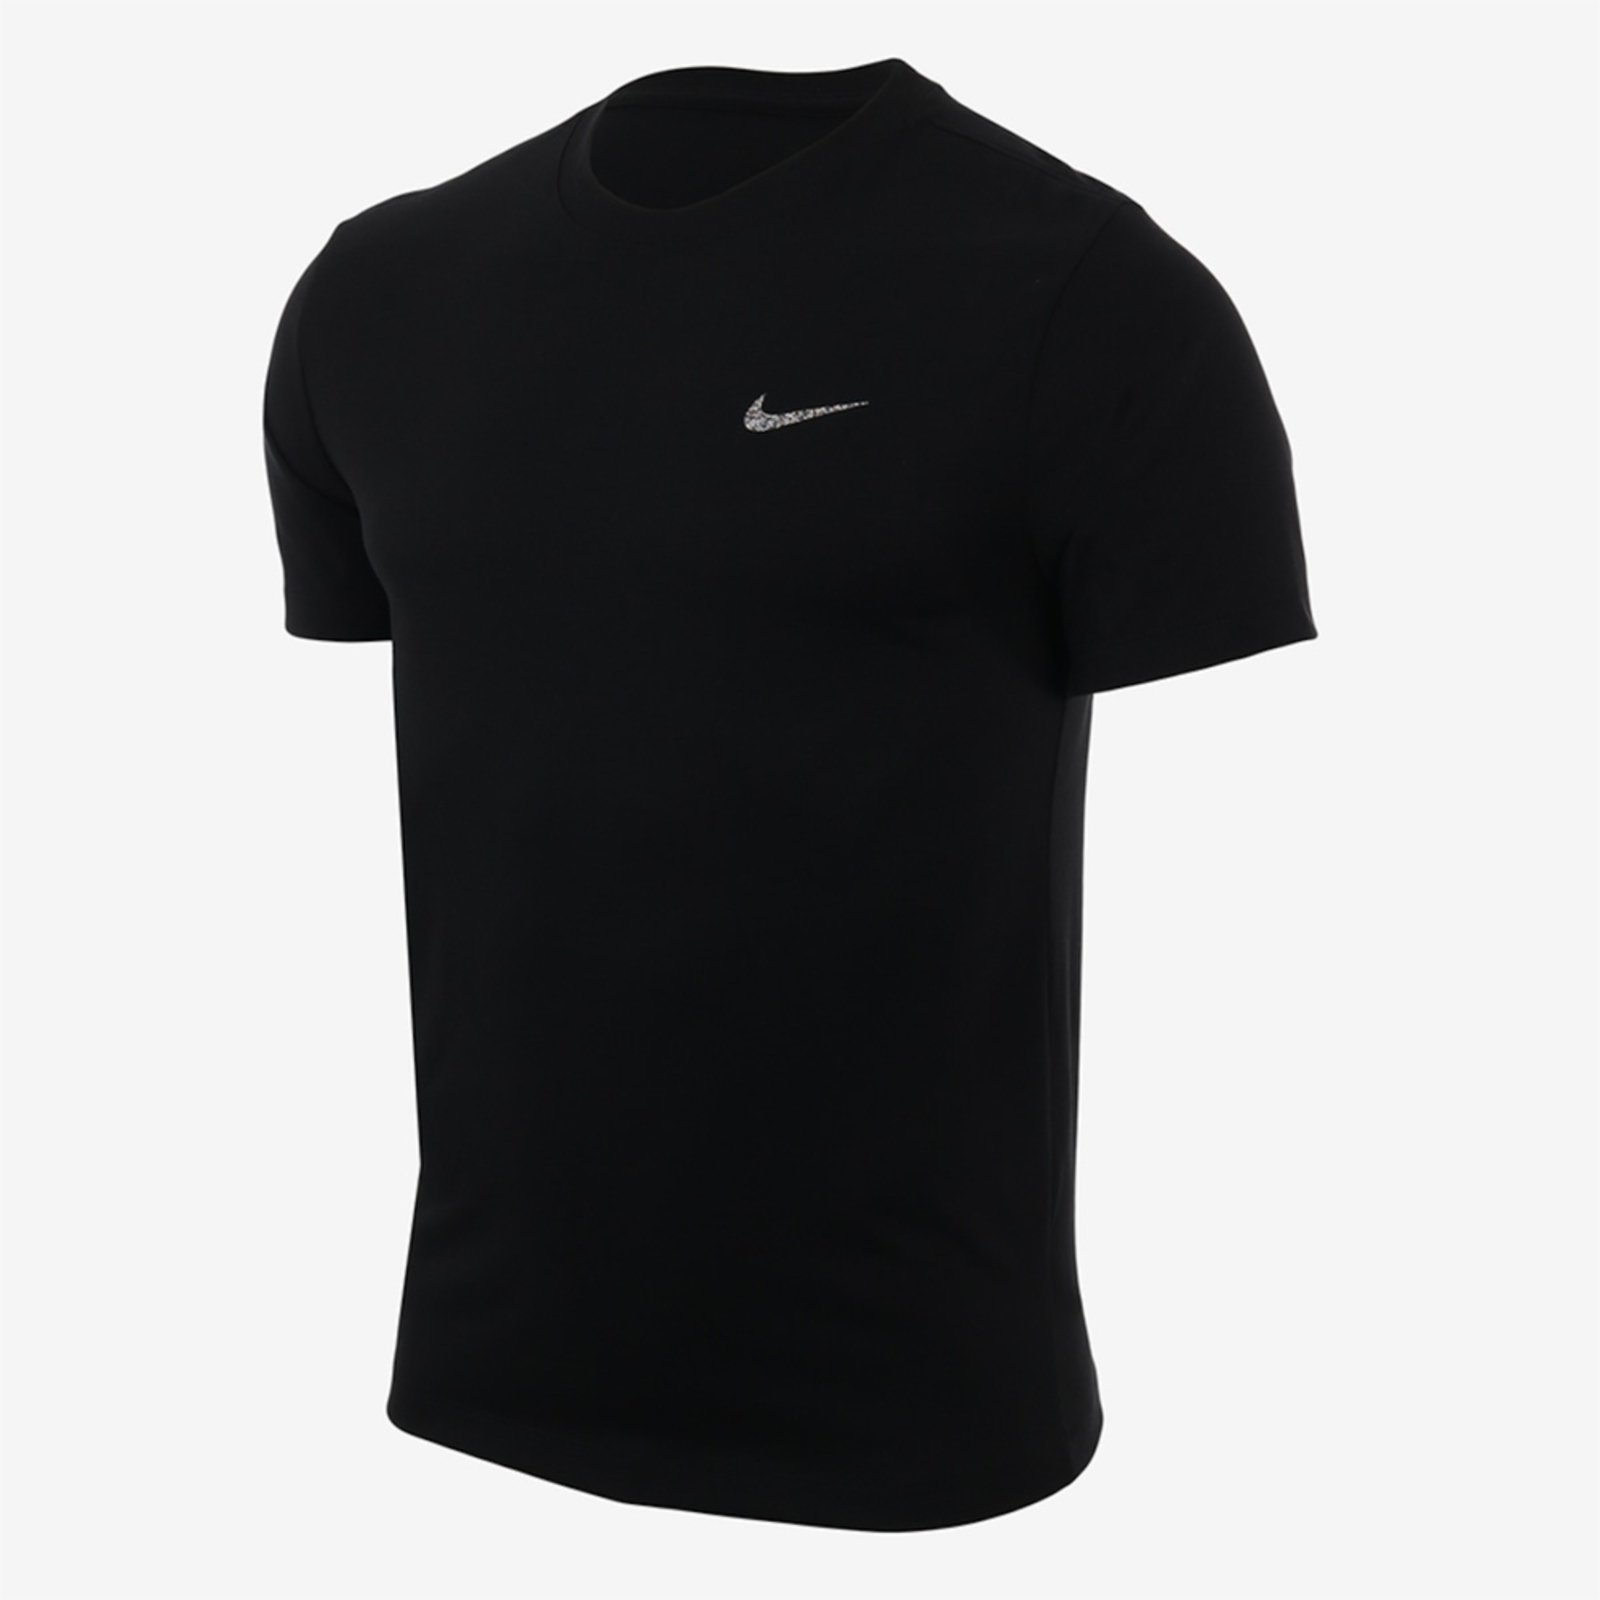 Camiseta Nike Yoga Dri-FIT - Masculina